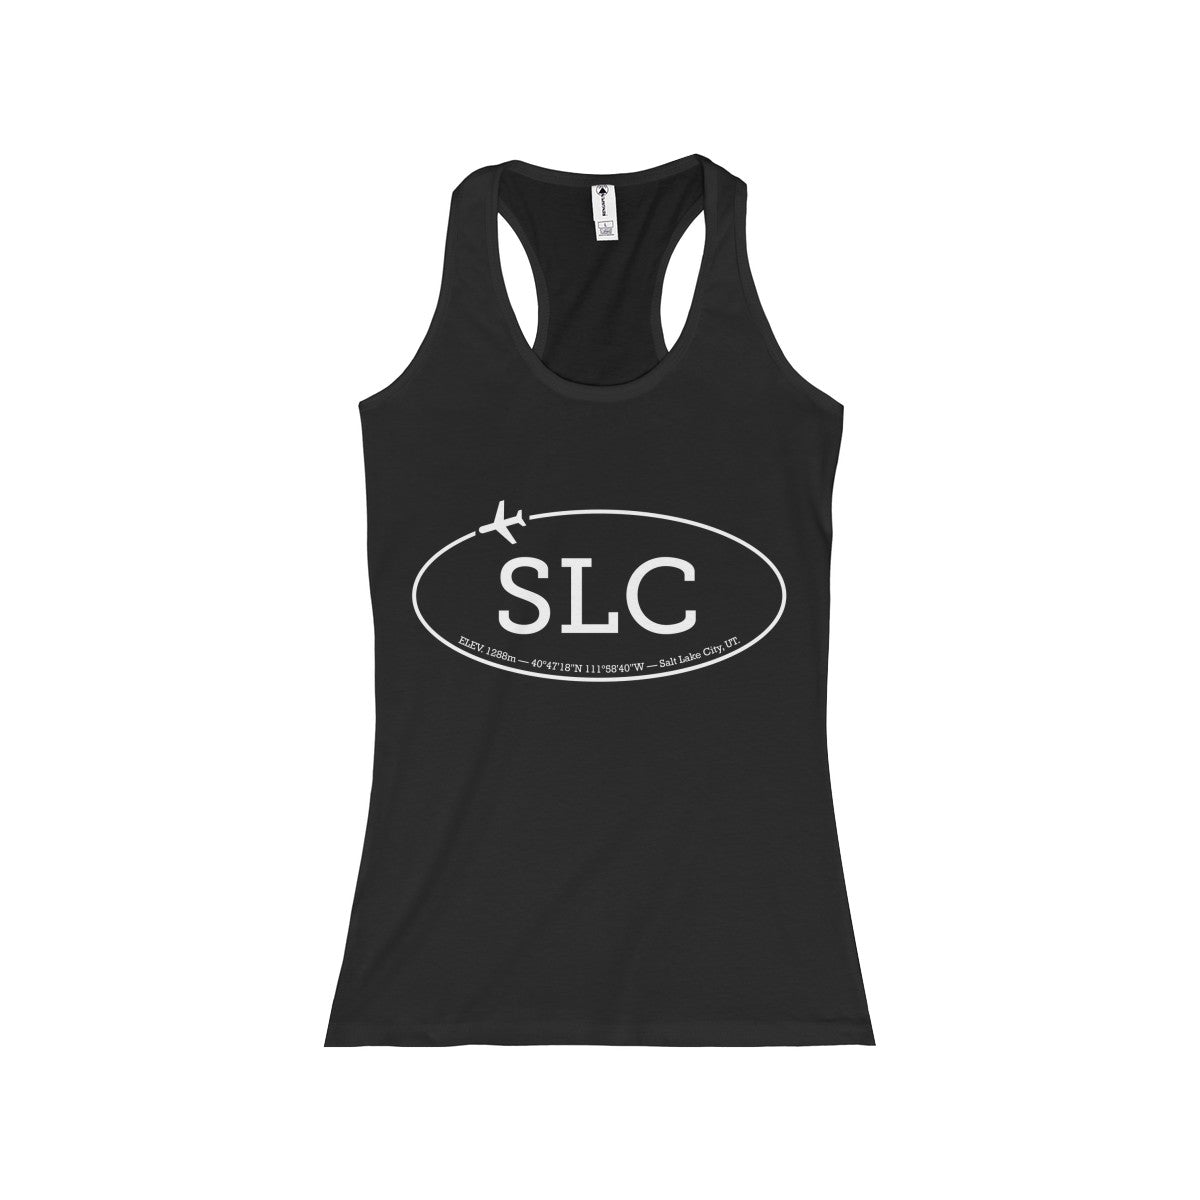 SLC Local - Women's Racerback Tank